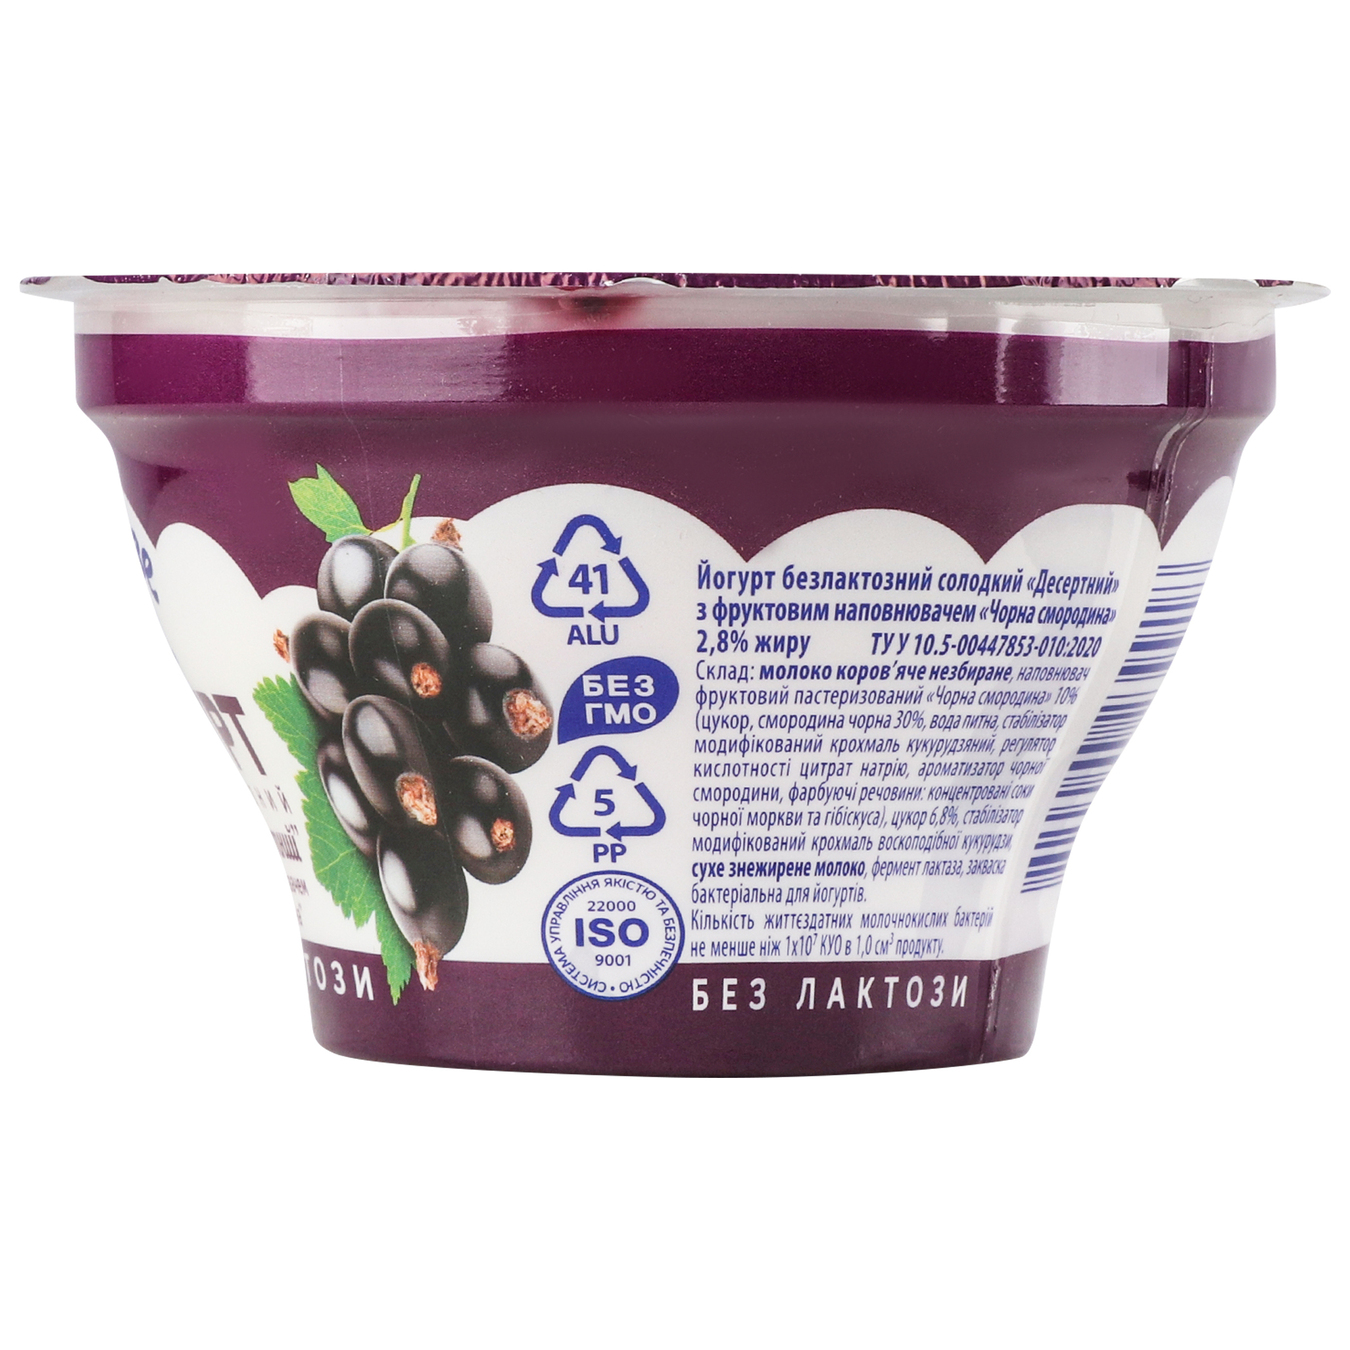 Yogurt cornfield black currant lactose-free 2.8% cup 140g 4